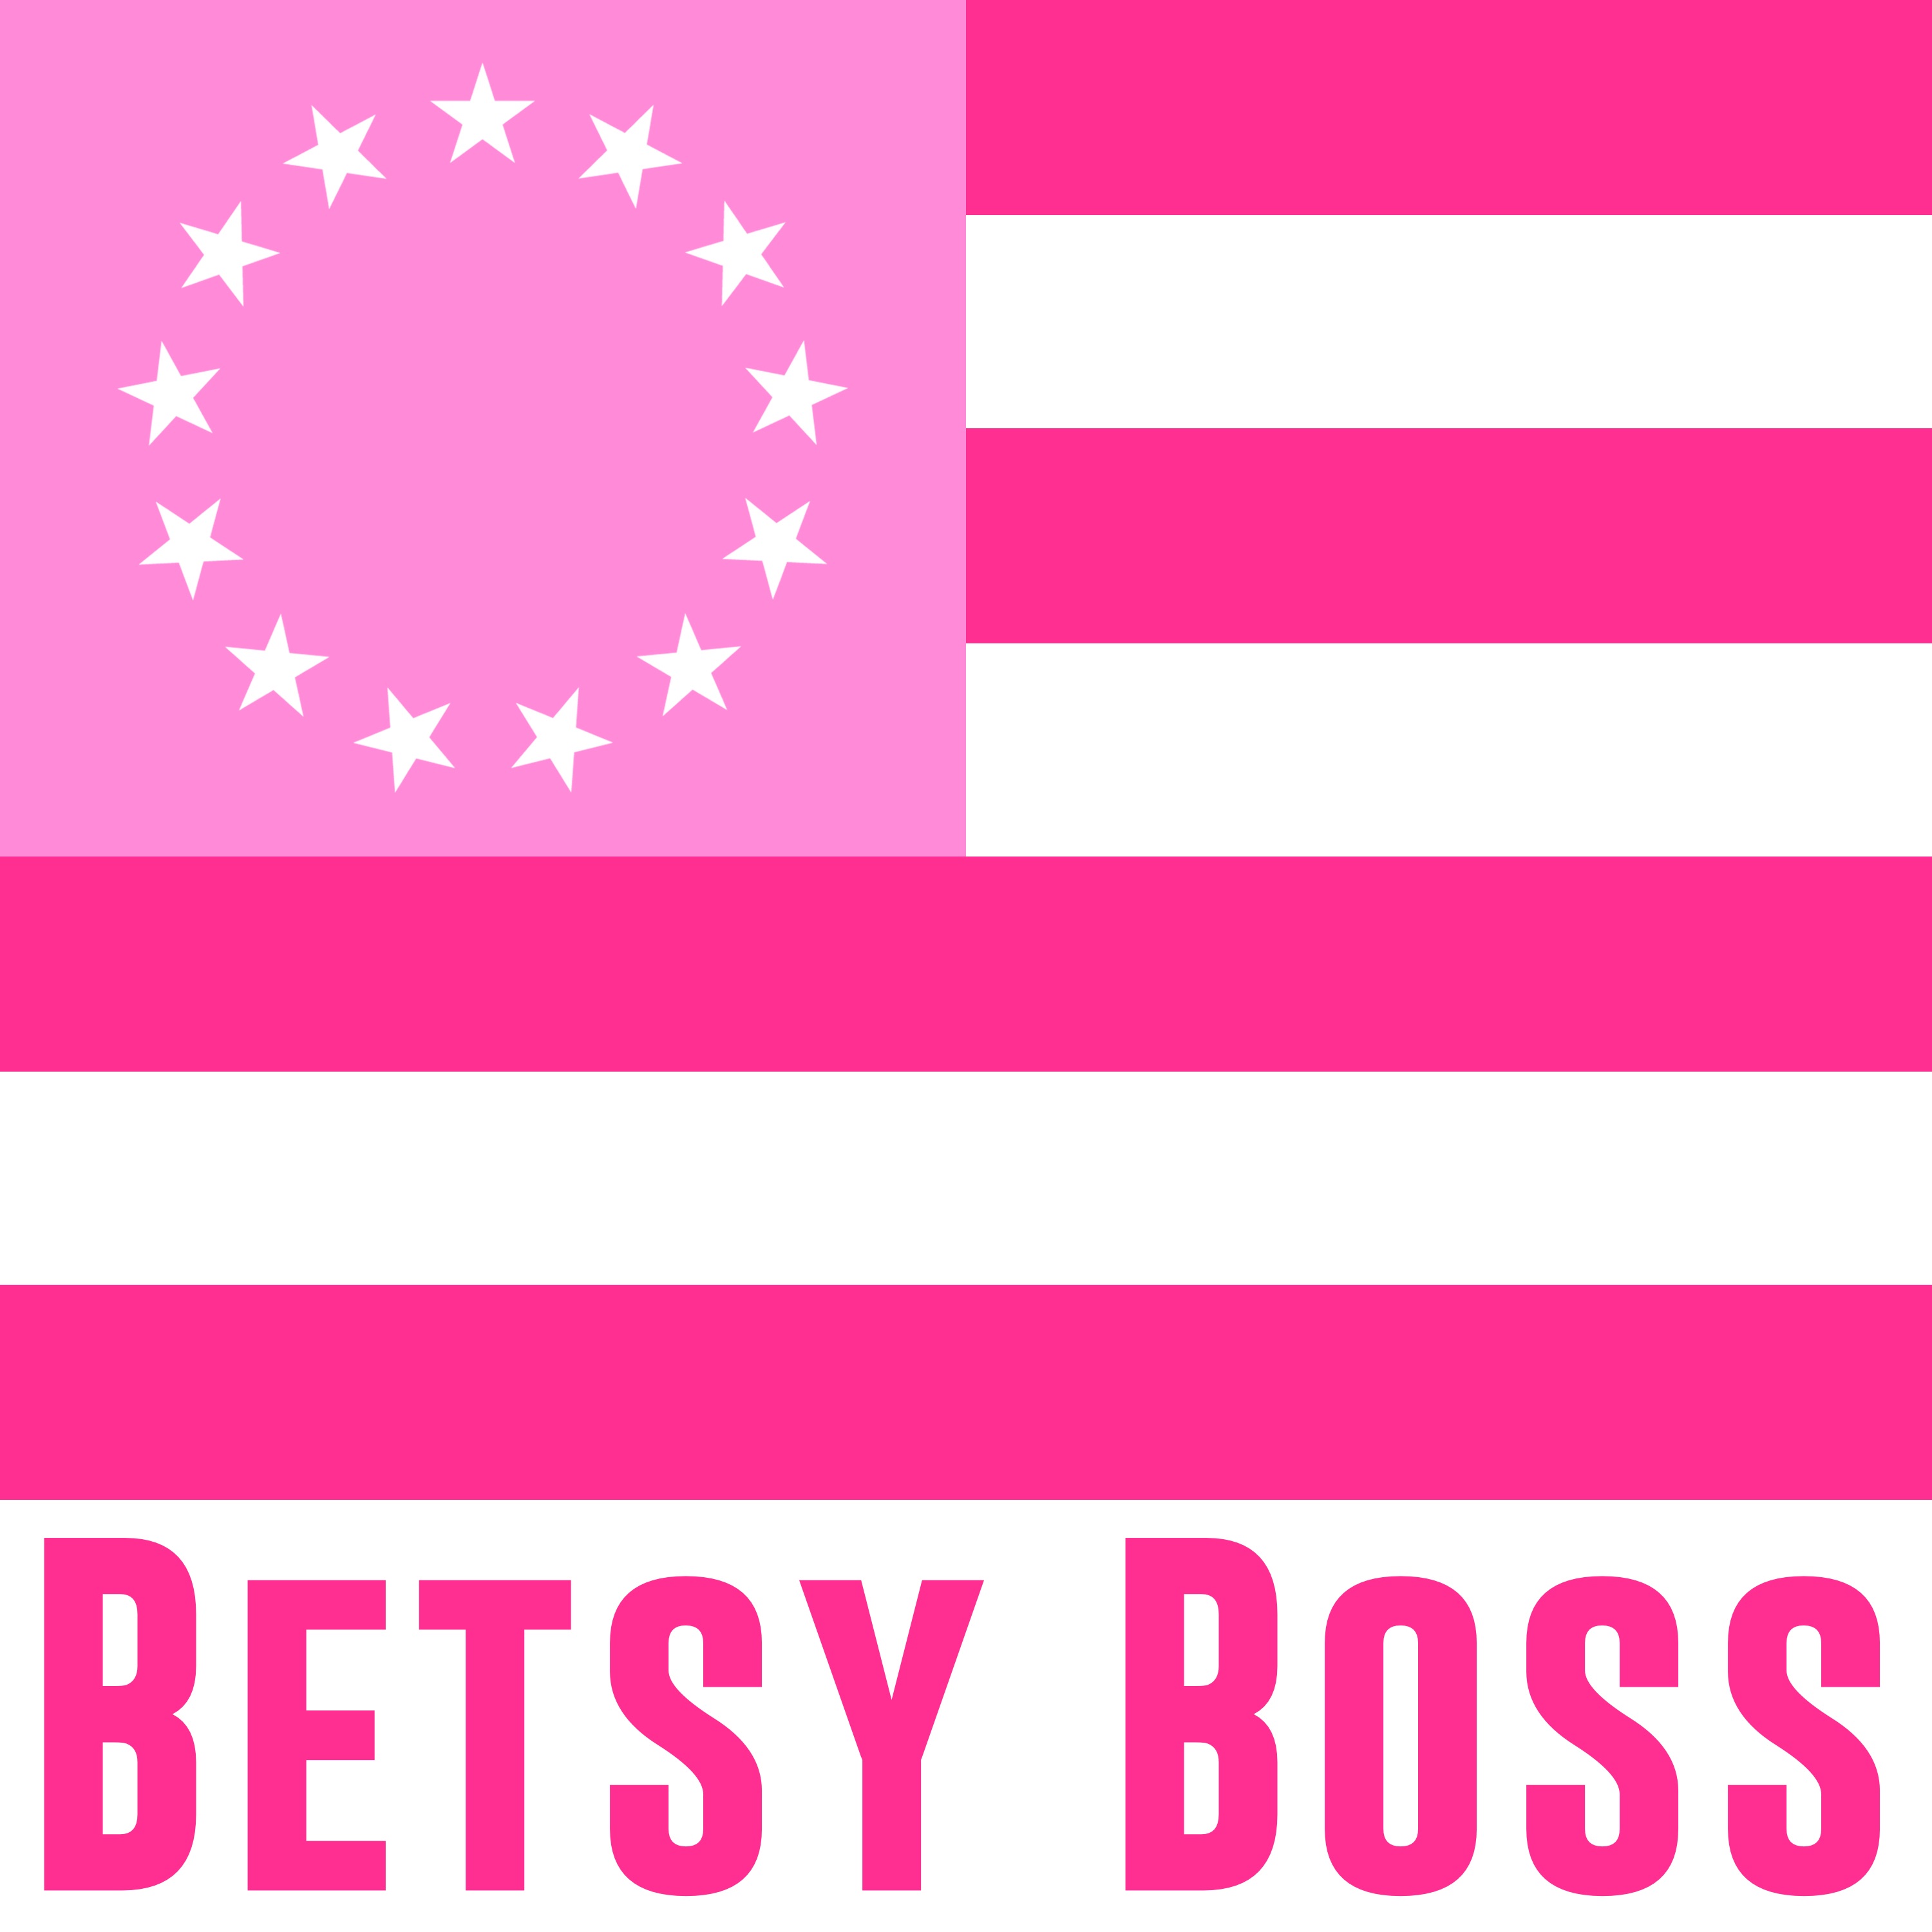 Betsy Boss Podcast